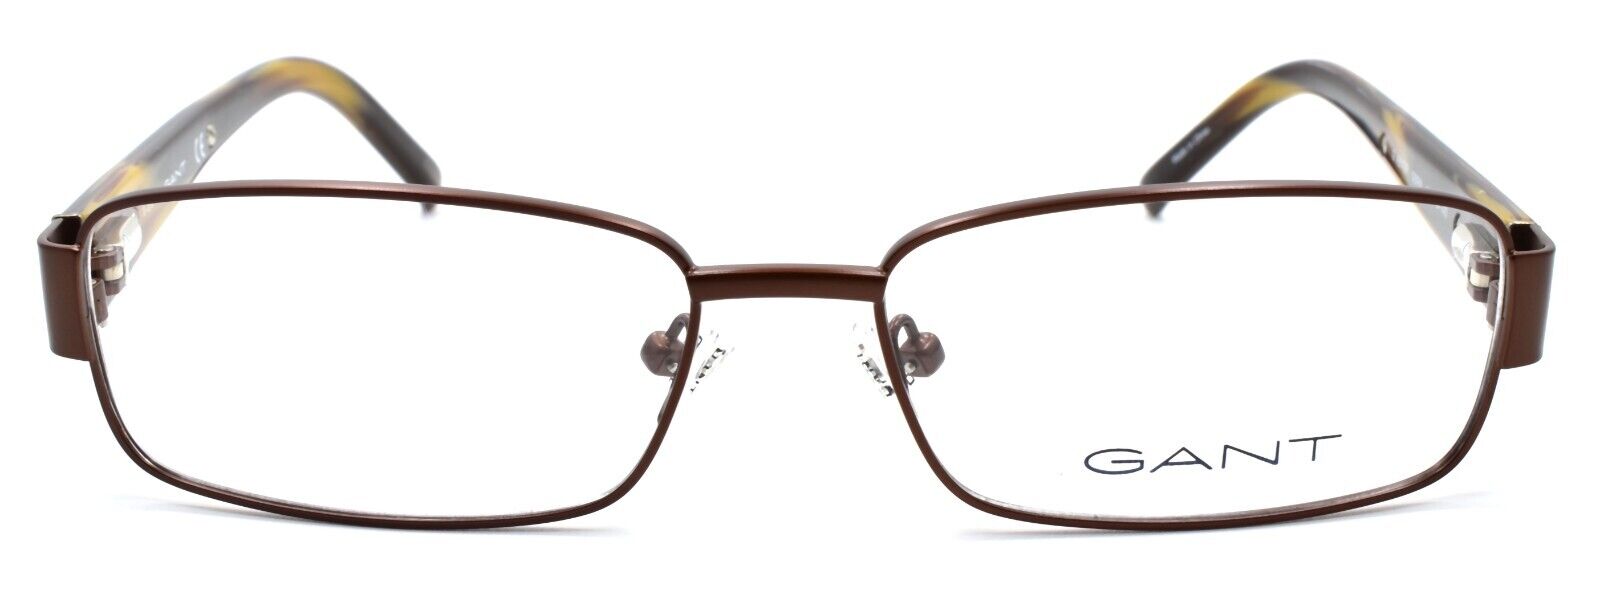 2-GANT G Abner SBRN Men's Eyeglasses Frames 55-15-140 Satin Brown-715583289574-IKSpecs